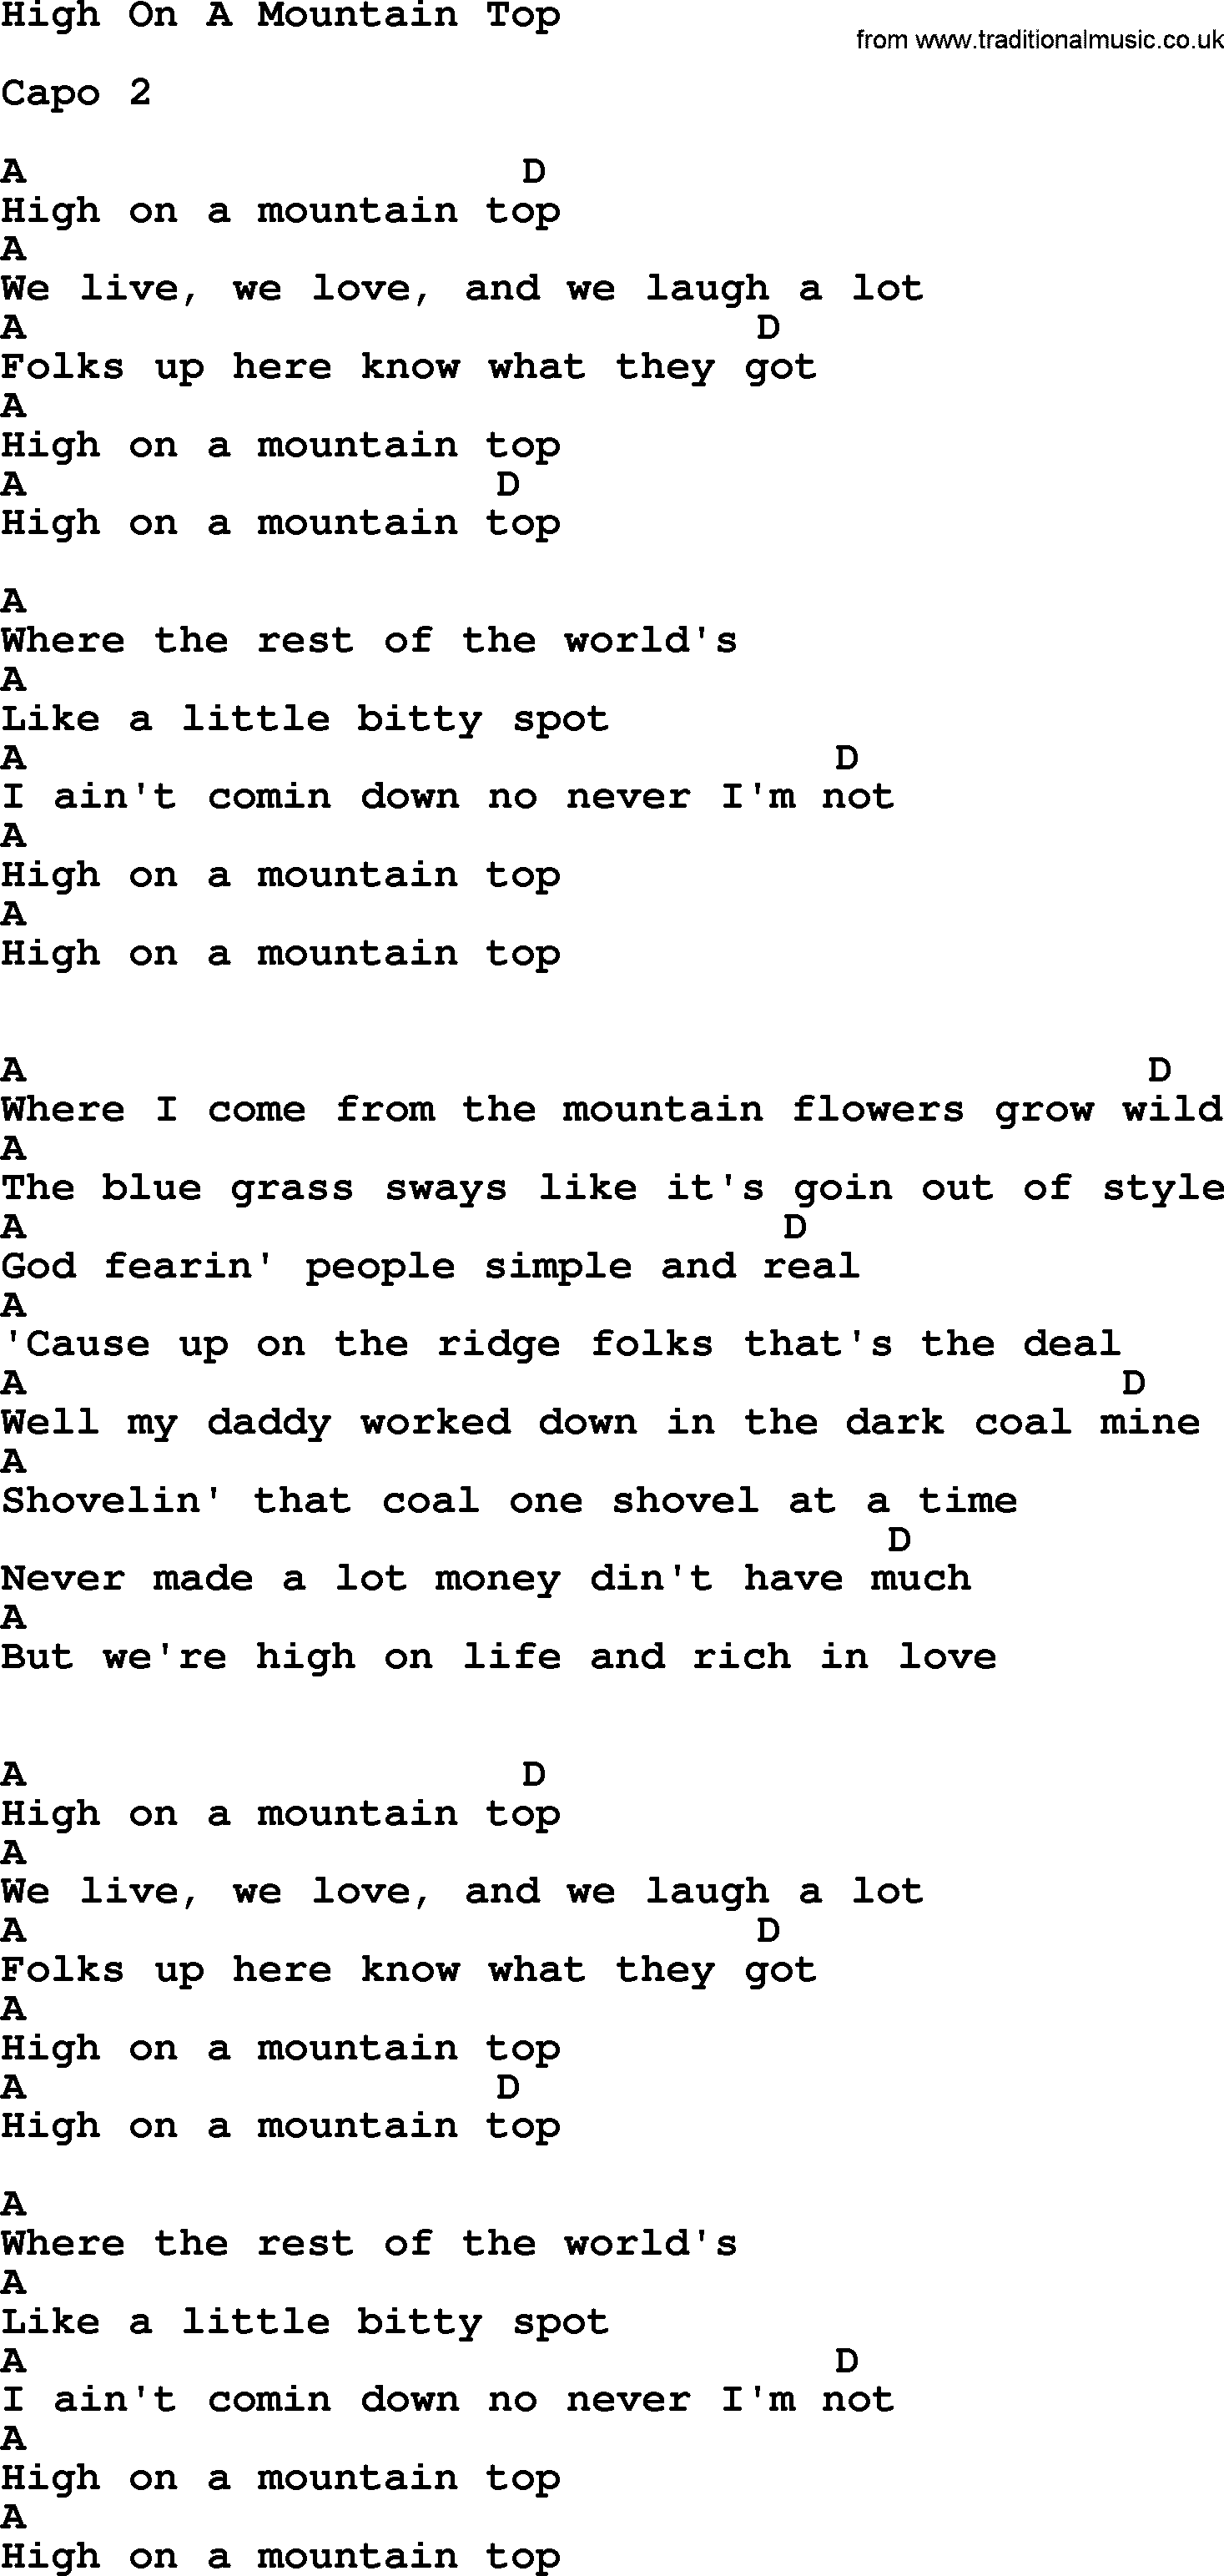 Loretta Lynn song: High On A Mountain Top lyrics and chords